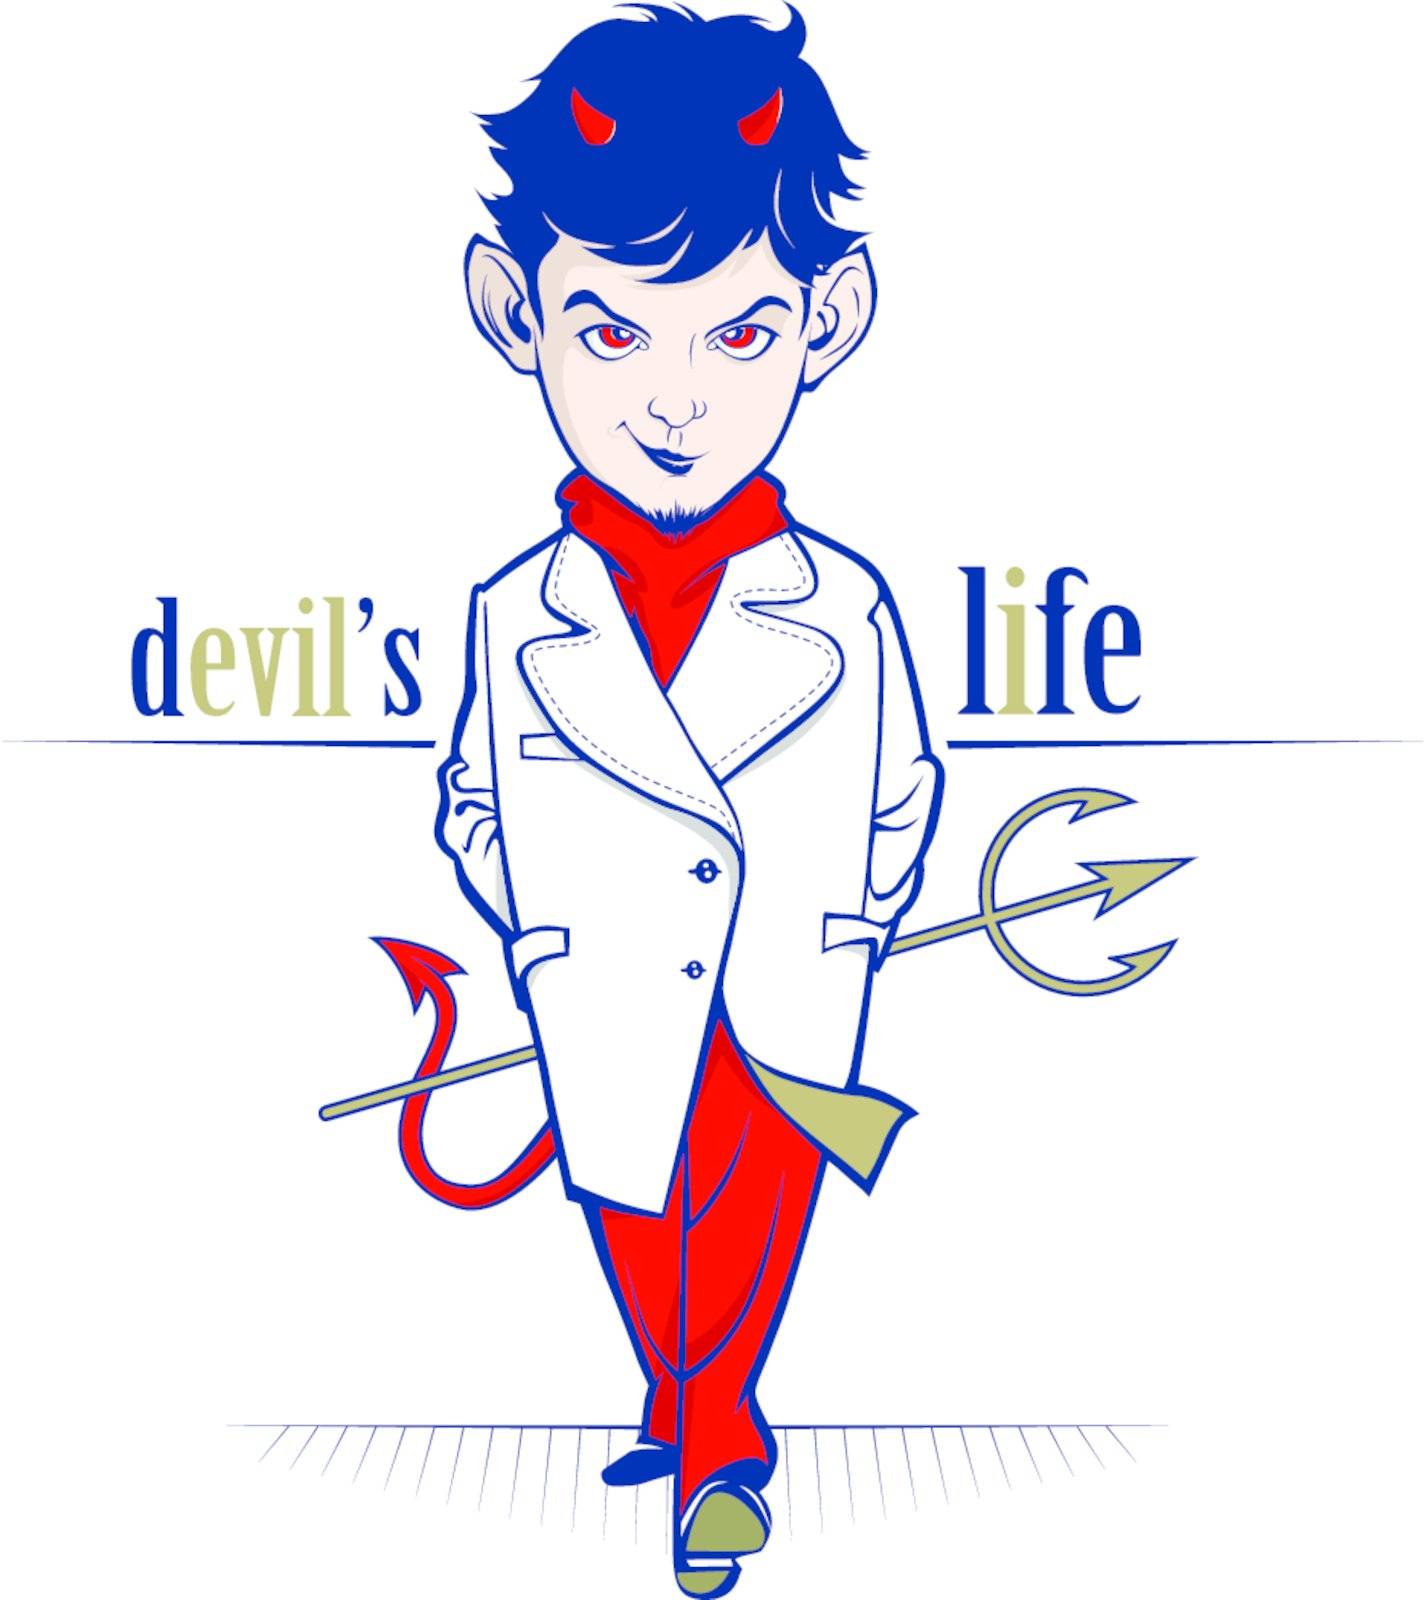 cartoon devil character by lusik_kolbaskin